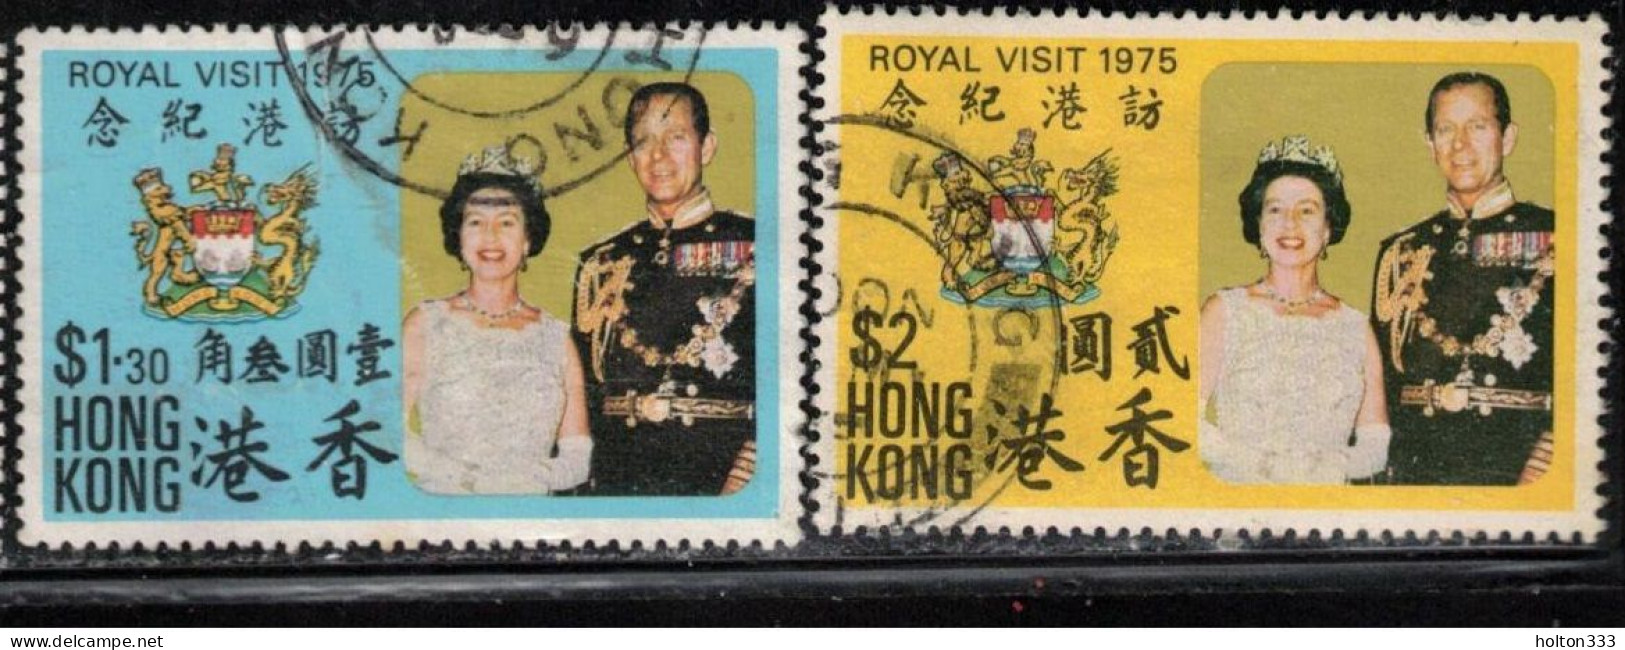 HONG KONG Scott # 304-5 Used - Royal Visit 1975 - Gebruikt